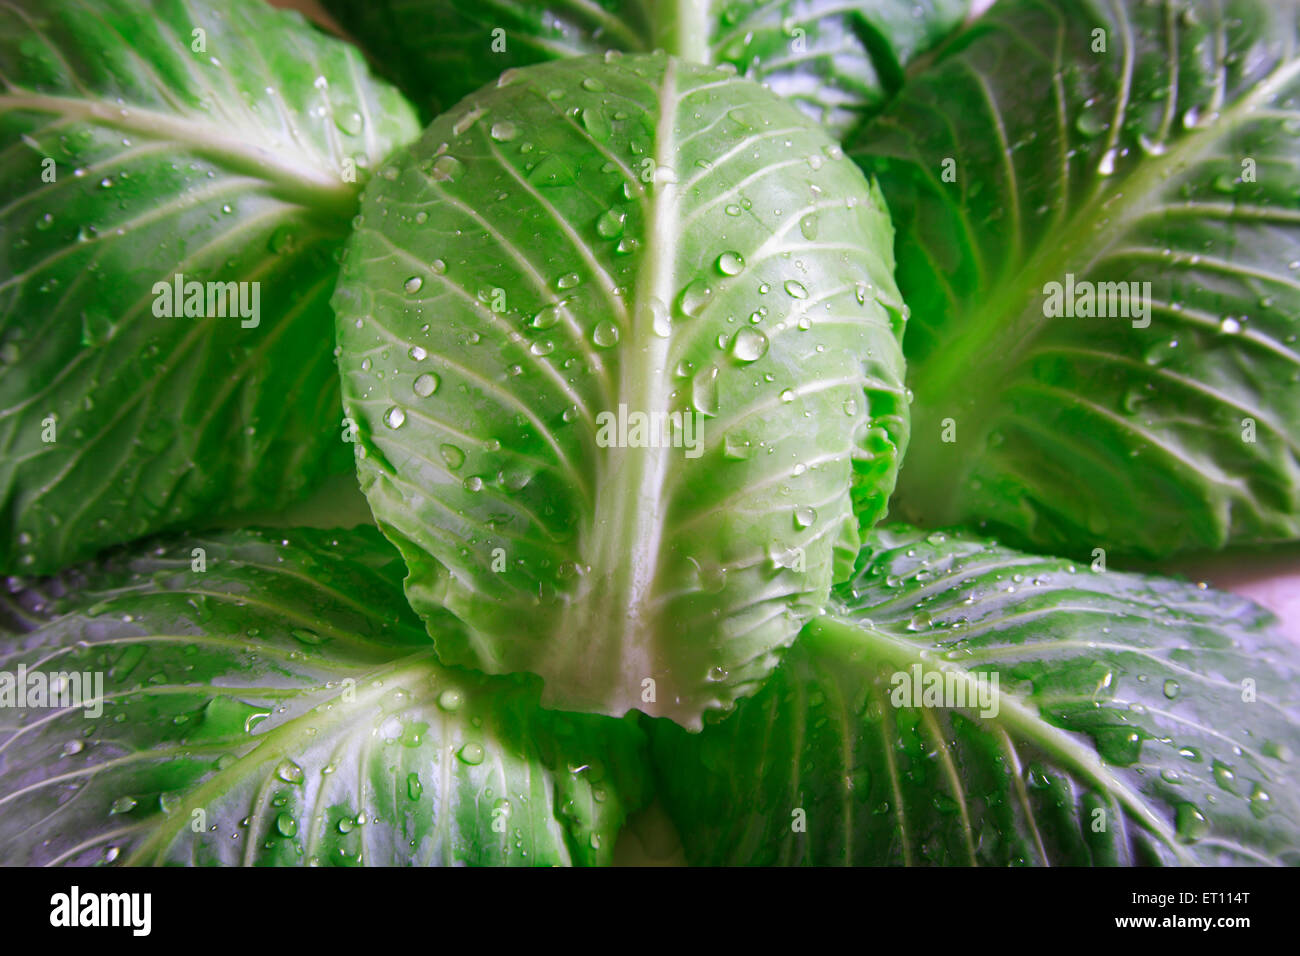 Vegetali verdi ; acqua scende su cavolo pattagobi Foto Stock